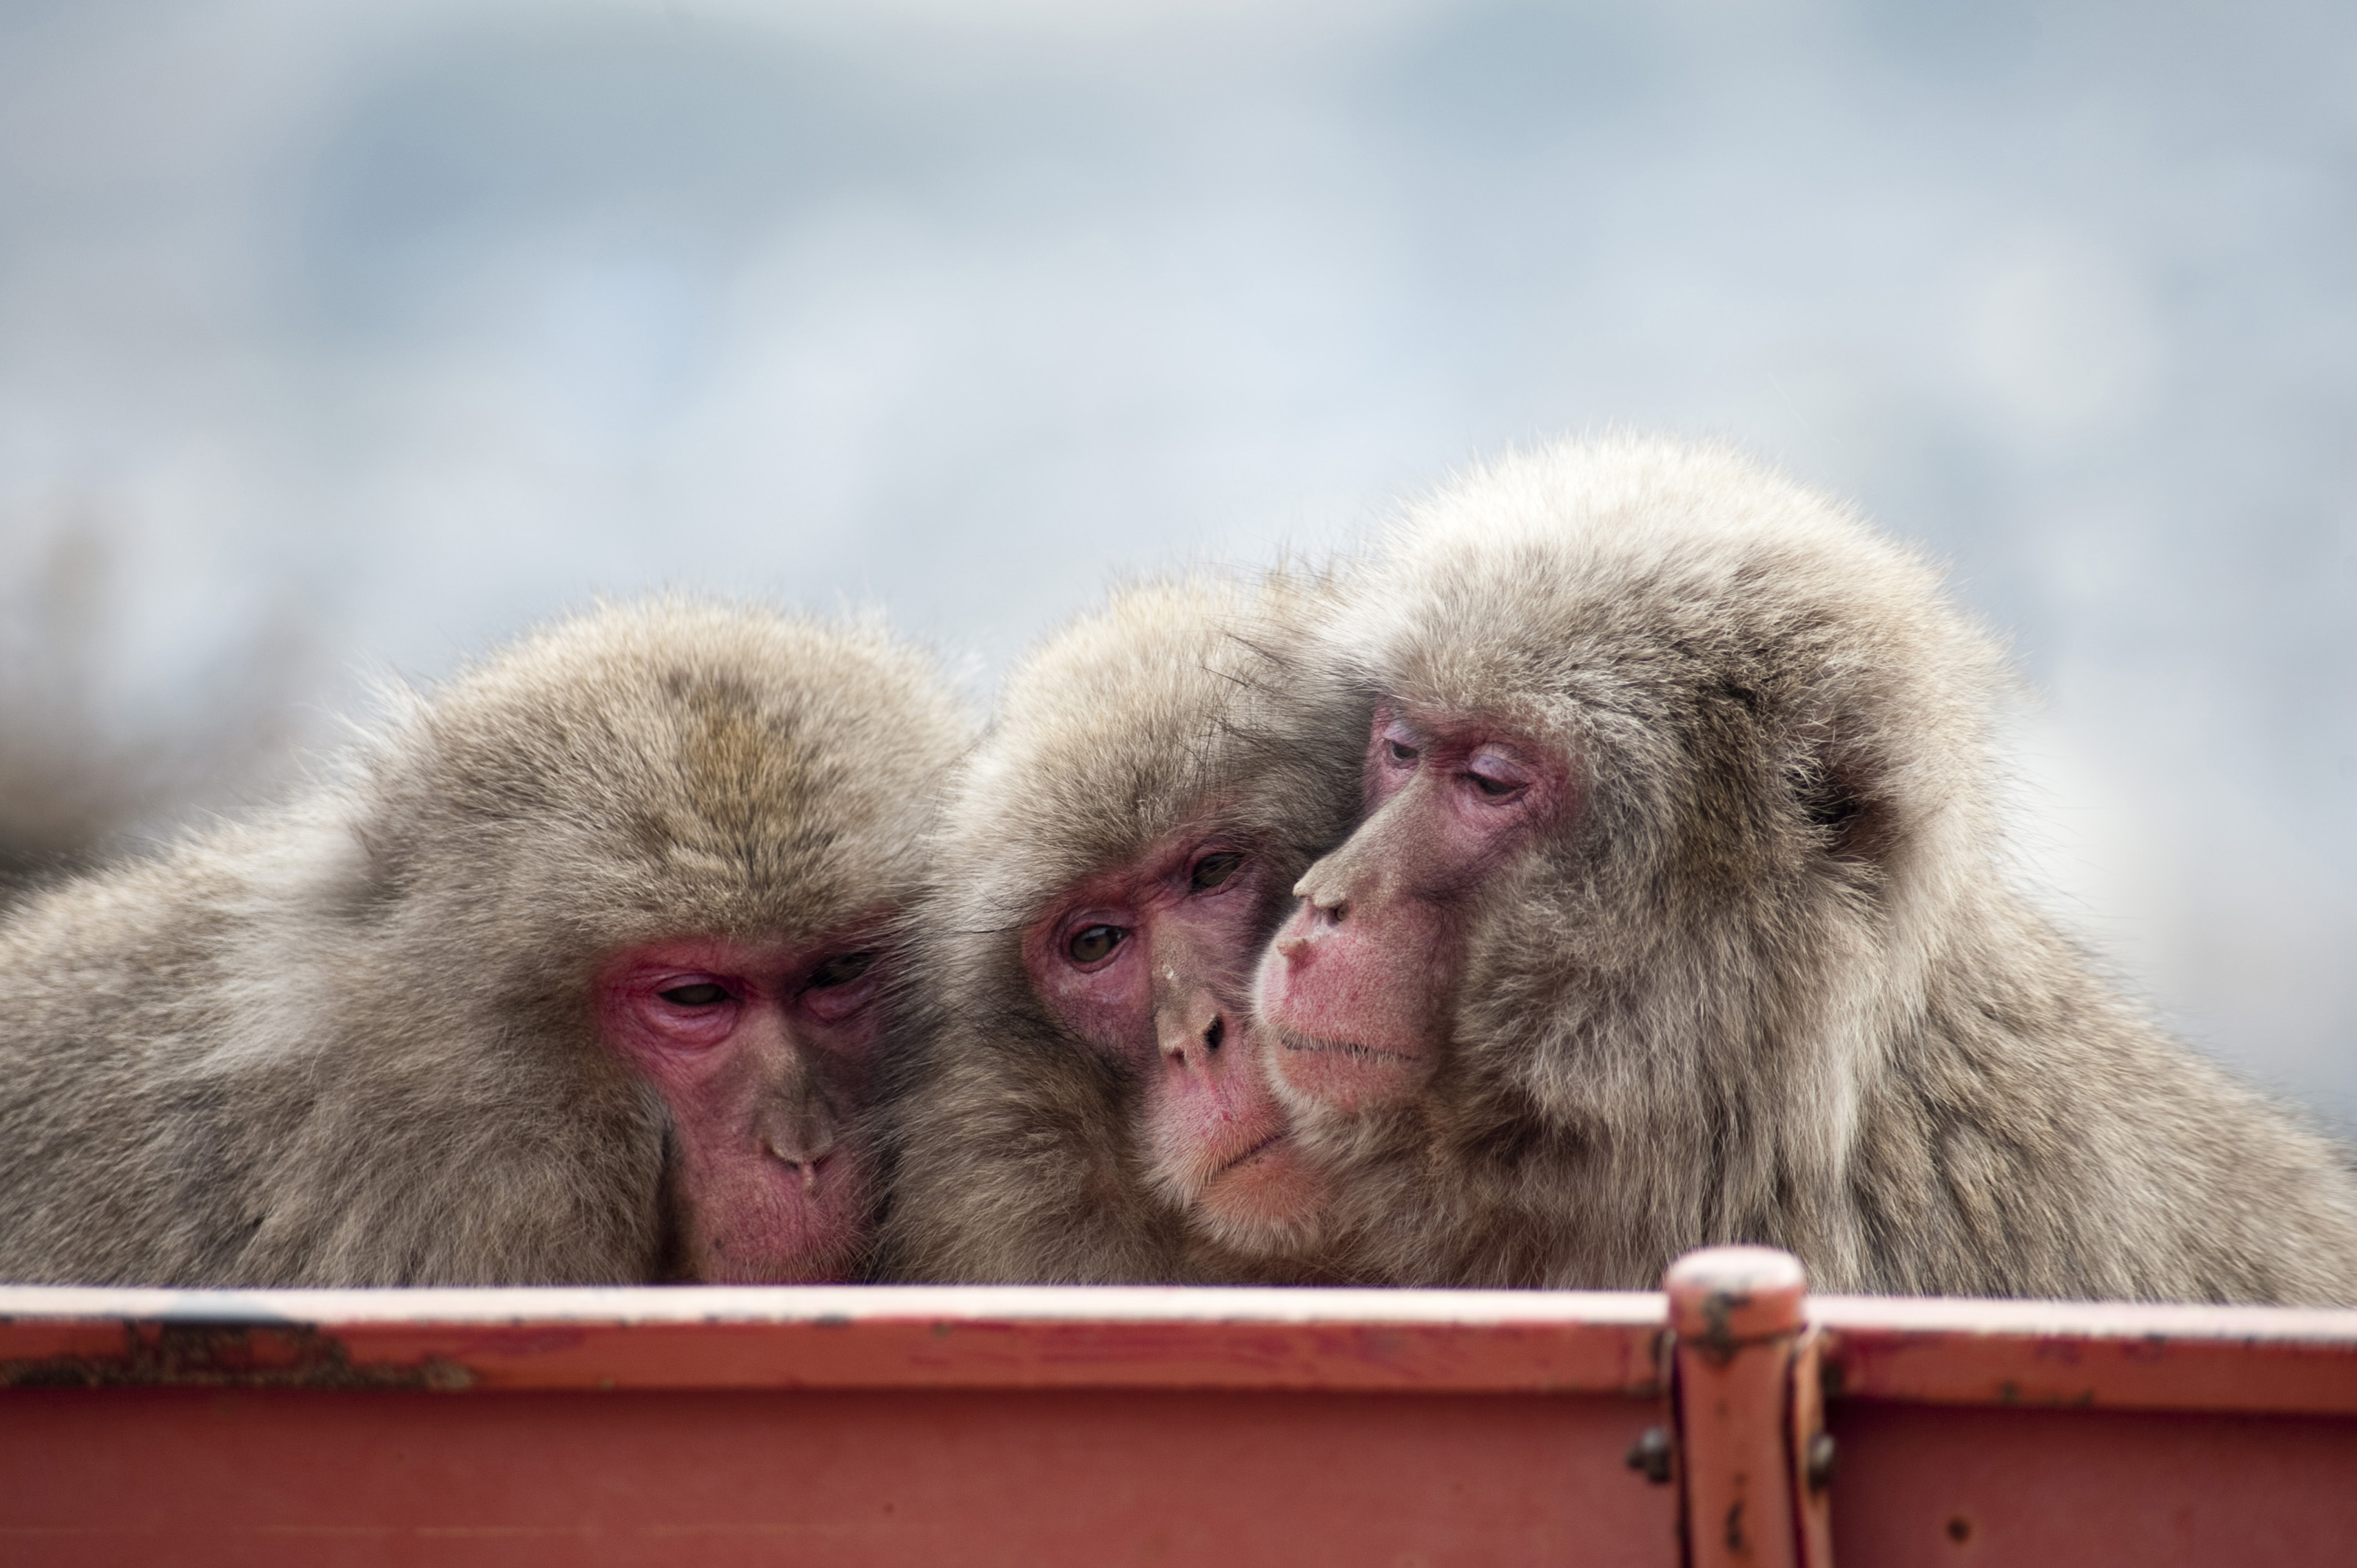 Обезьяна 3 буквы. Три обезьяны. Заставка на рабочий стол три обезьяны. Три мартышки. Три обезьяны фото.